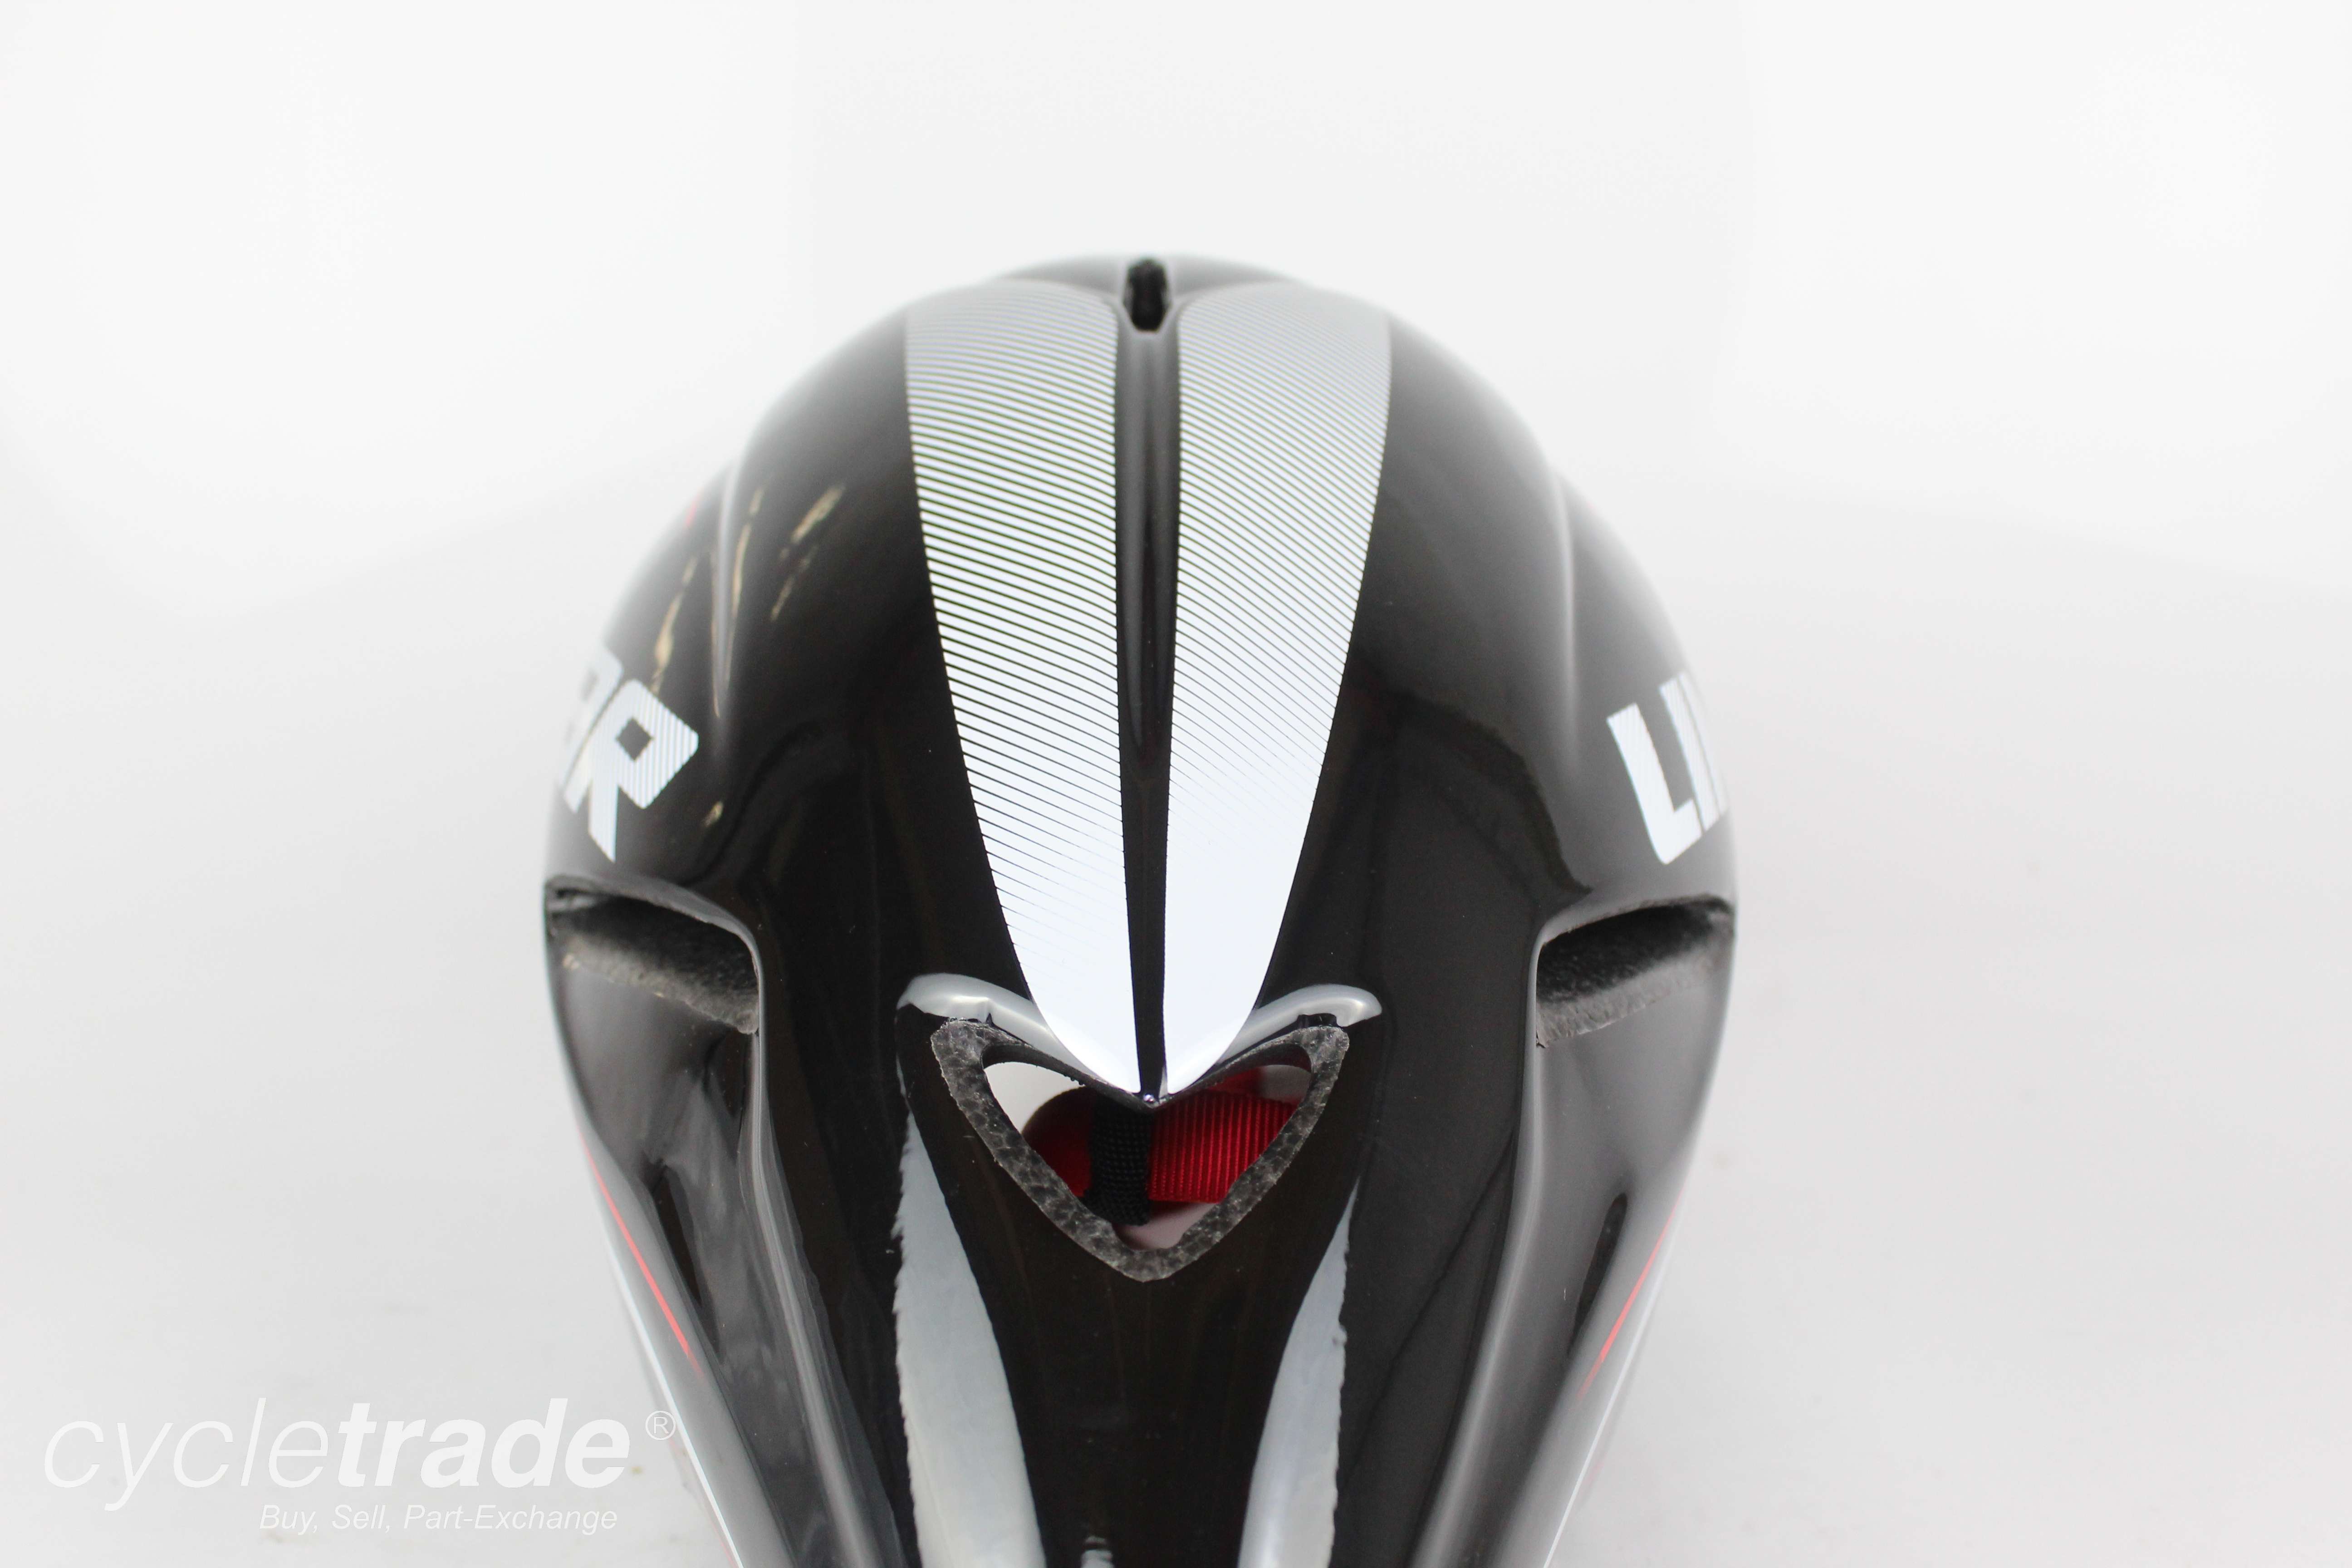 NEW Helmet - Limar Speed Demon UniSize L 54-61cm Black/Red - Grade A+